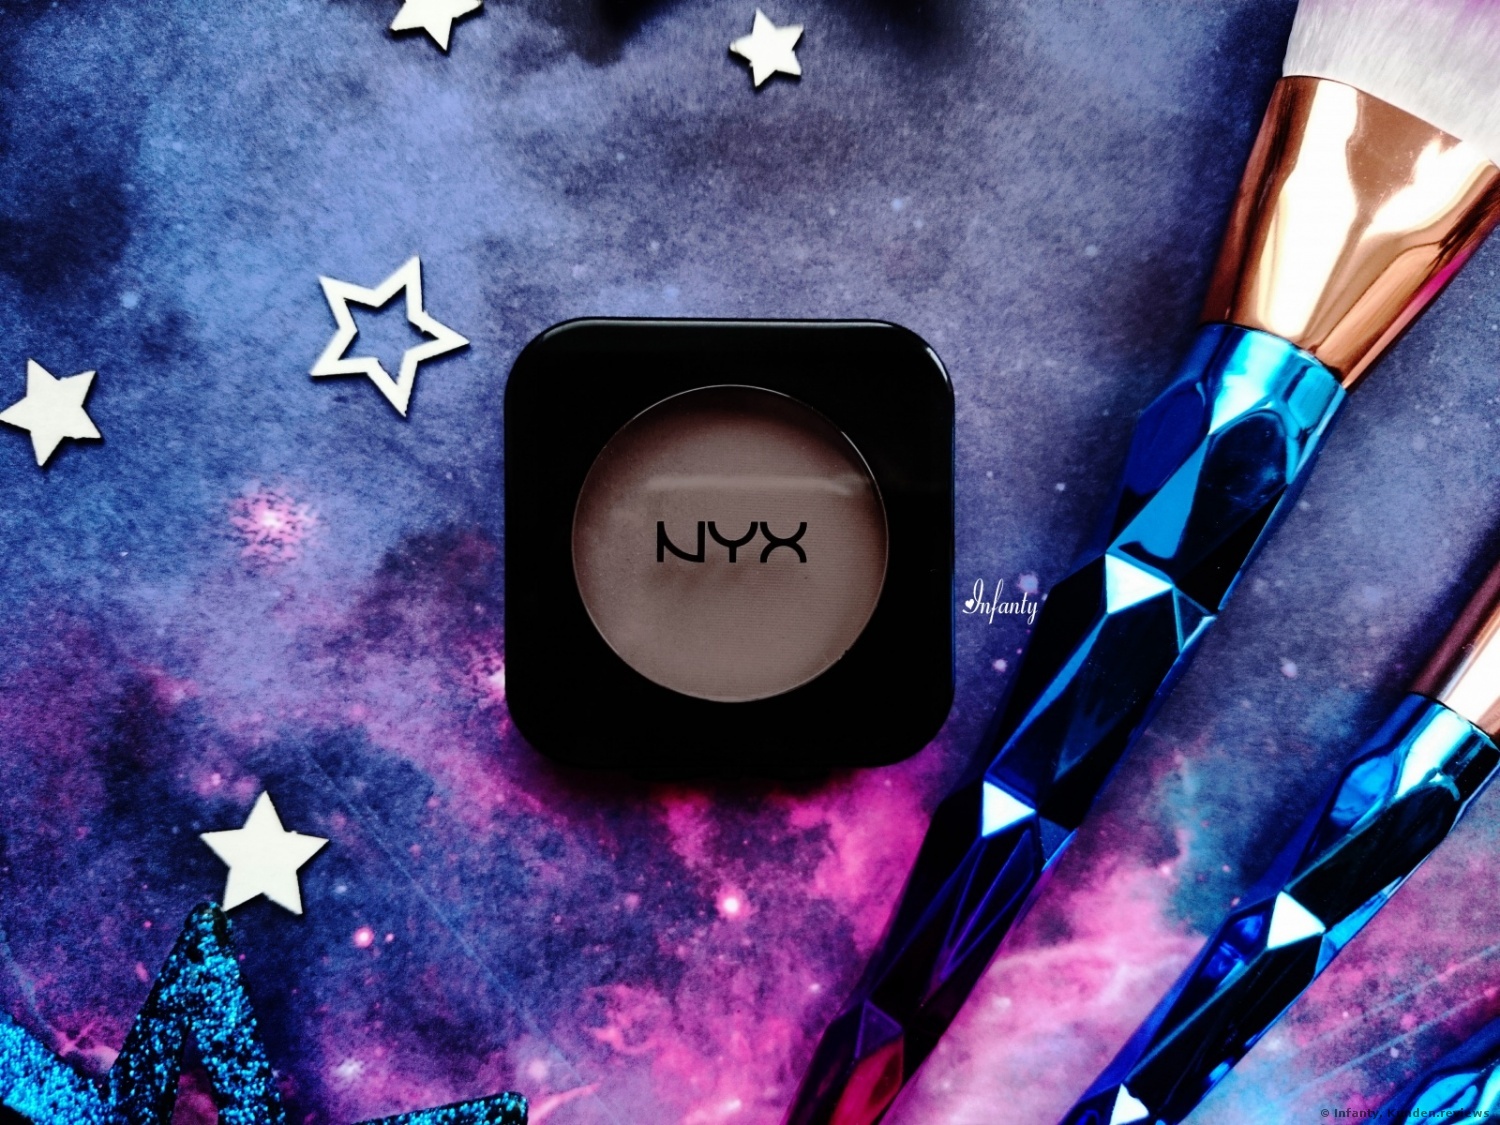 NYX High Definition Blush Foto